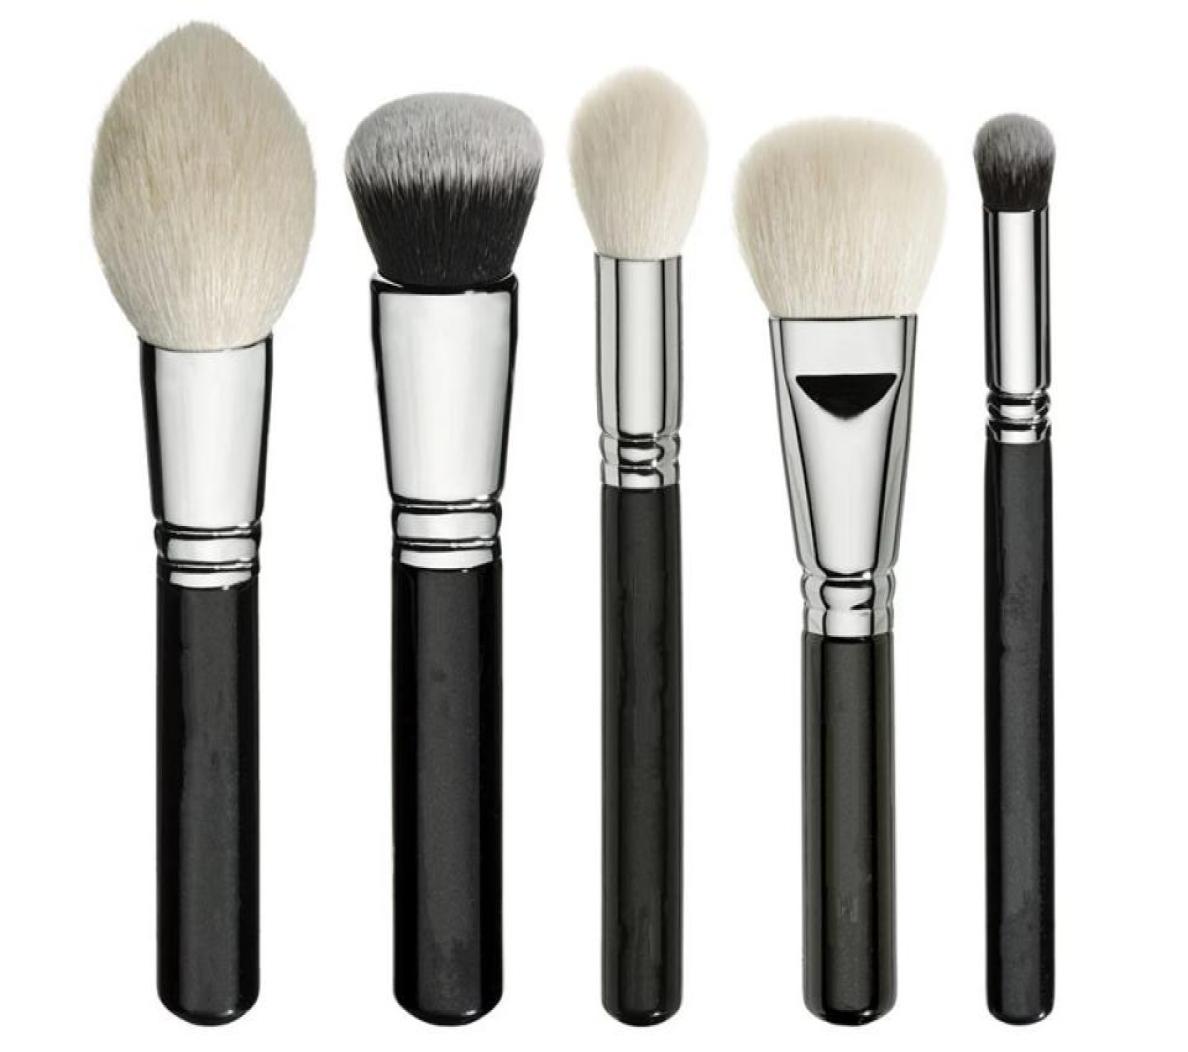 Zoeva Professional 15pcs Makeup Brush Setfoundation Brusheye Shadow Brushblush Brushprofessional Makeup Makeup Tools 2010091417020